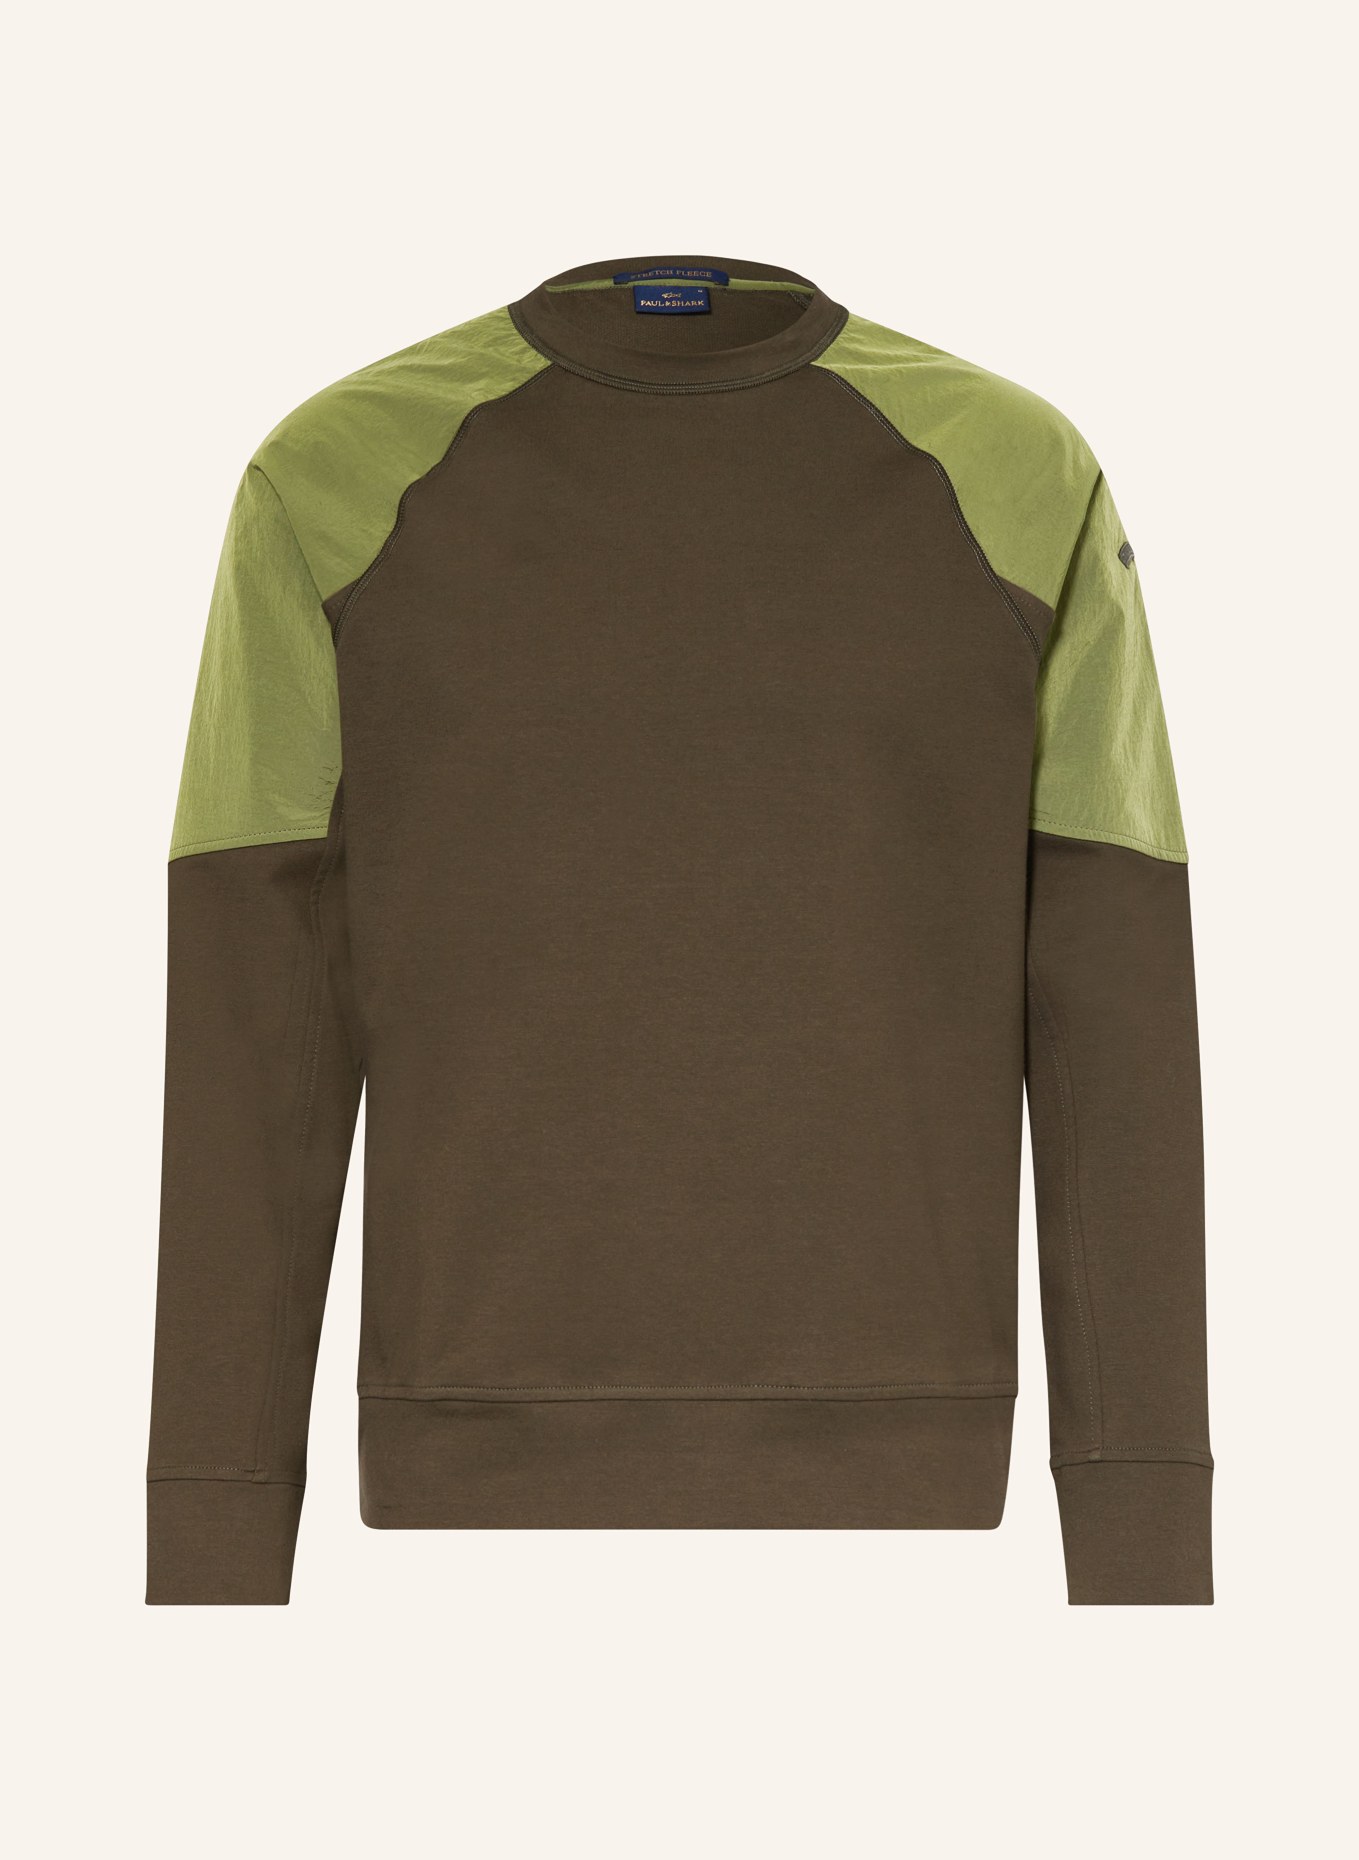 PAUL & SHARK Sweatshirt im Materialmix, Farbe: OLIV/ KHAKI (Bild 1)